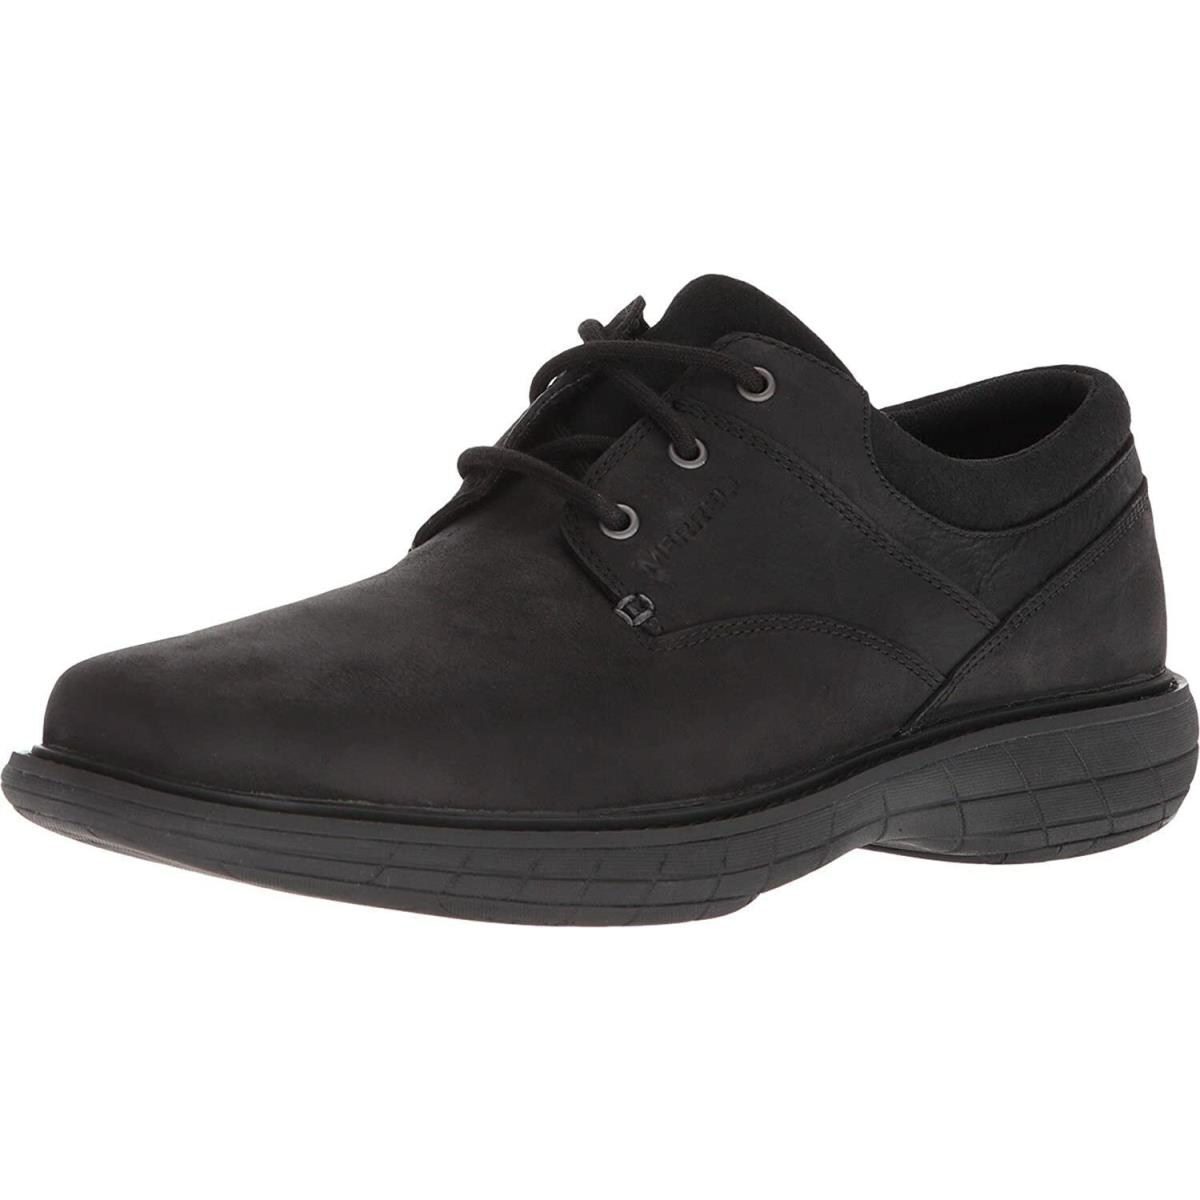 Men`s Merrell World Vue Lace Up Oxford Shoe Black Nuback Leather J94019